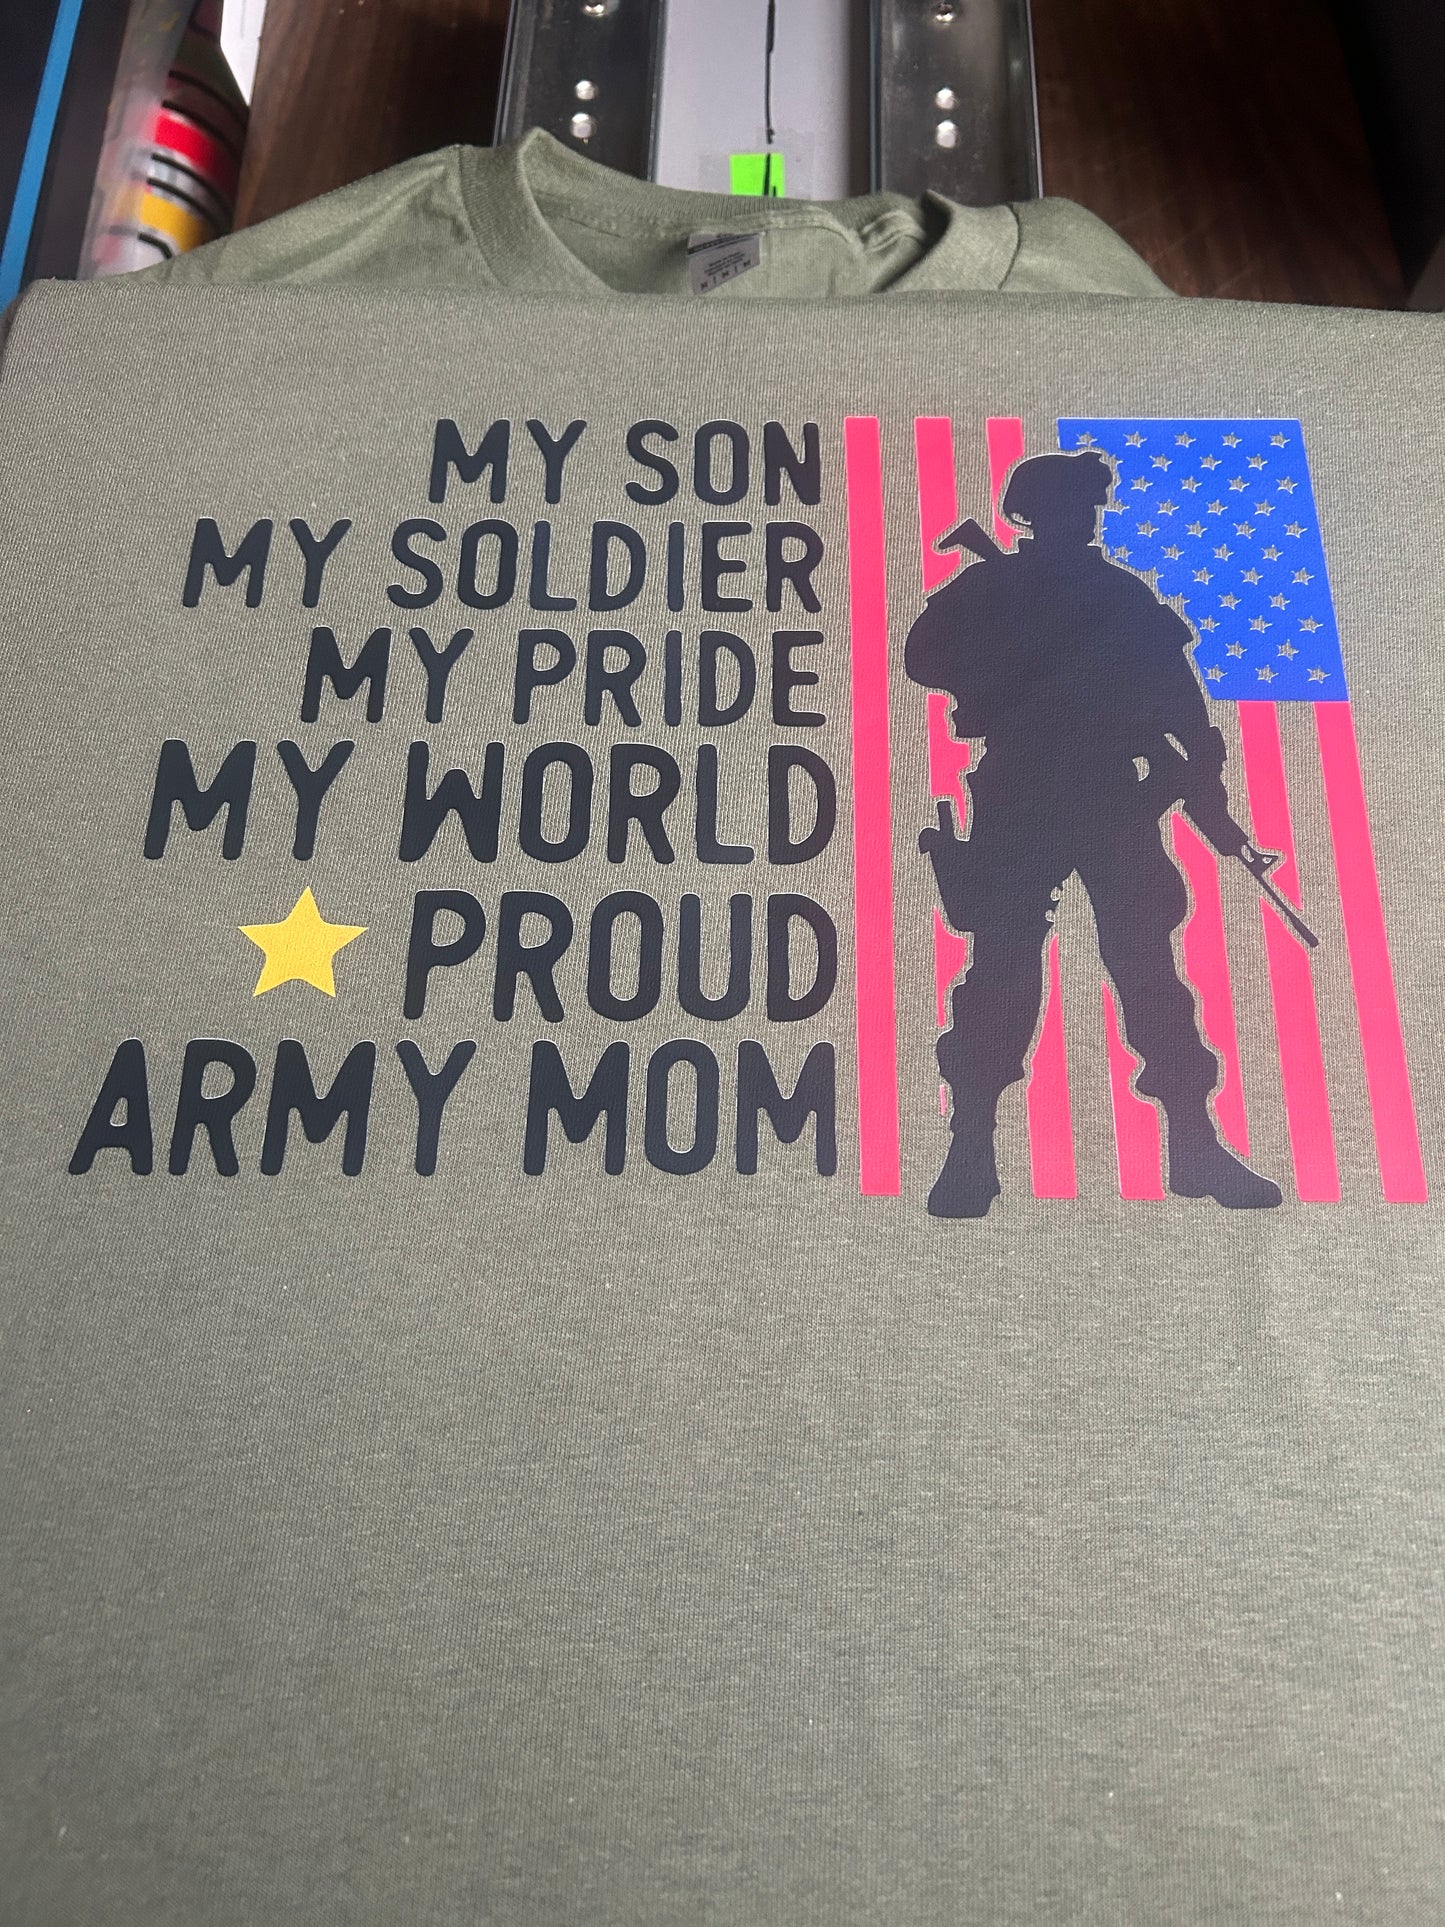 Army mom